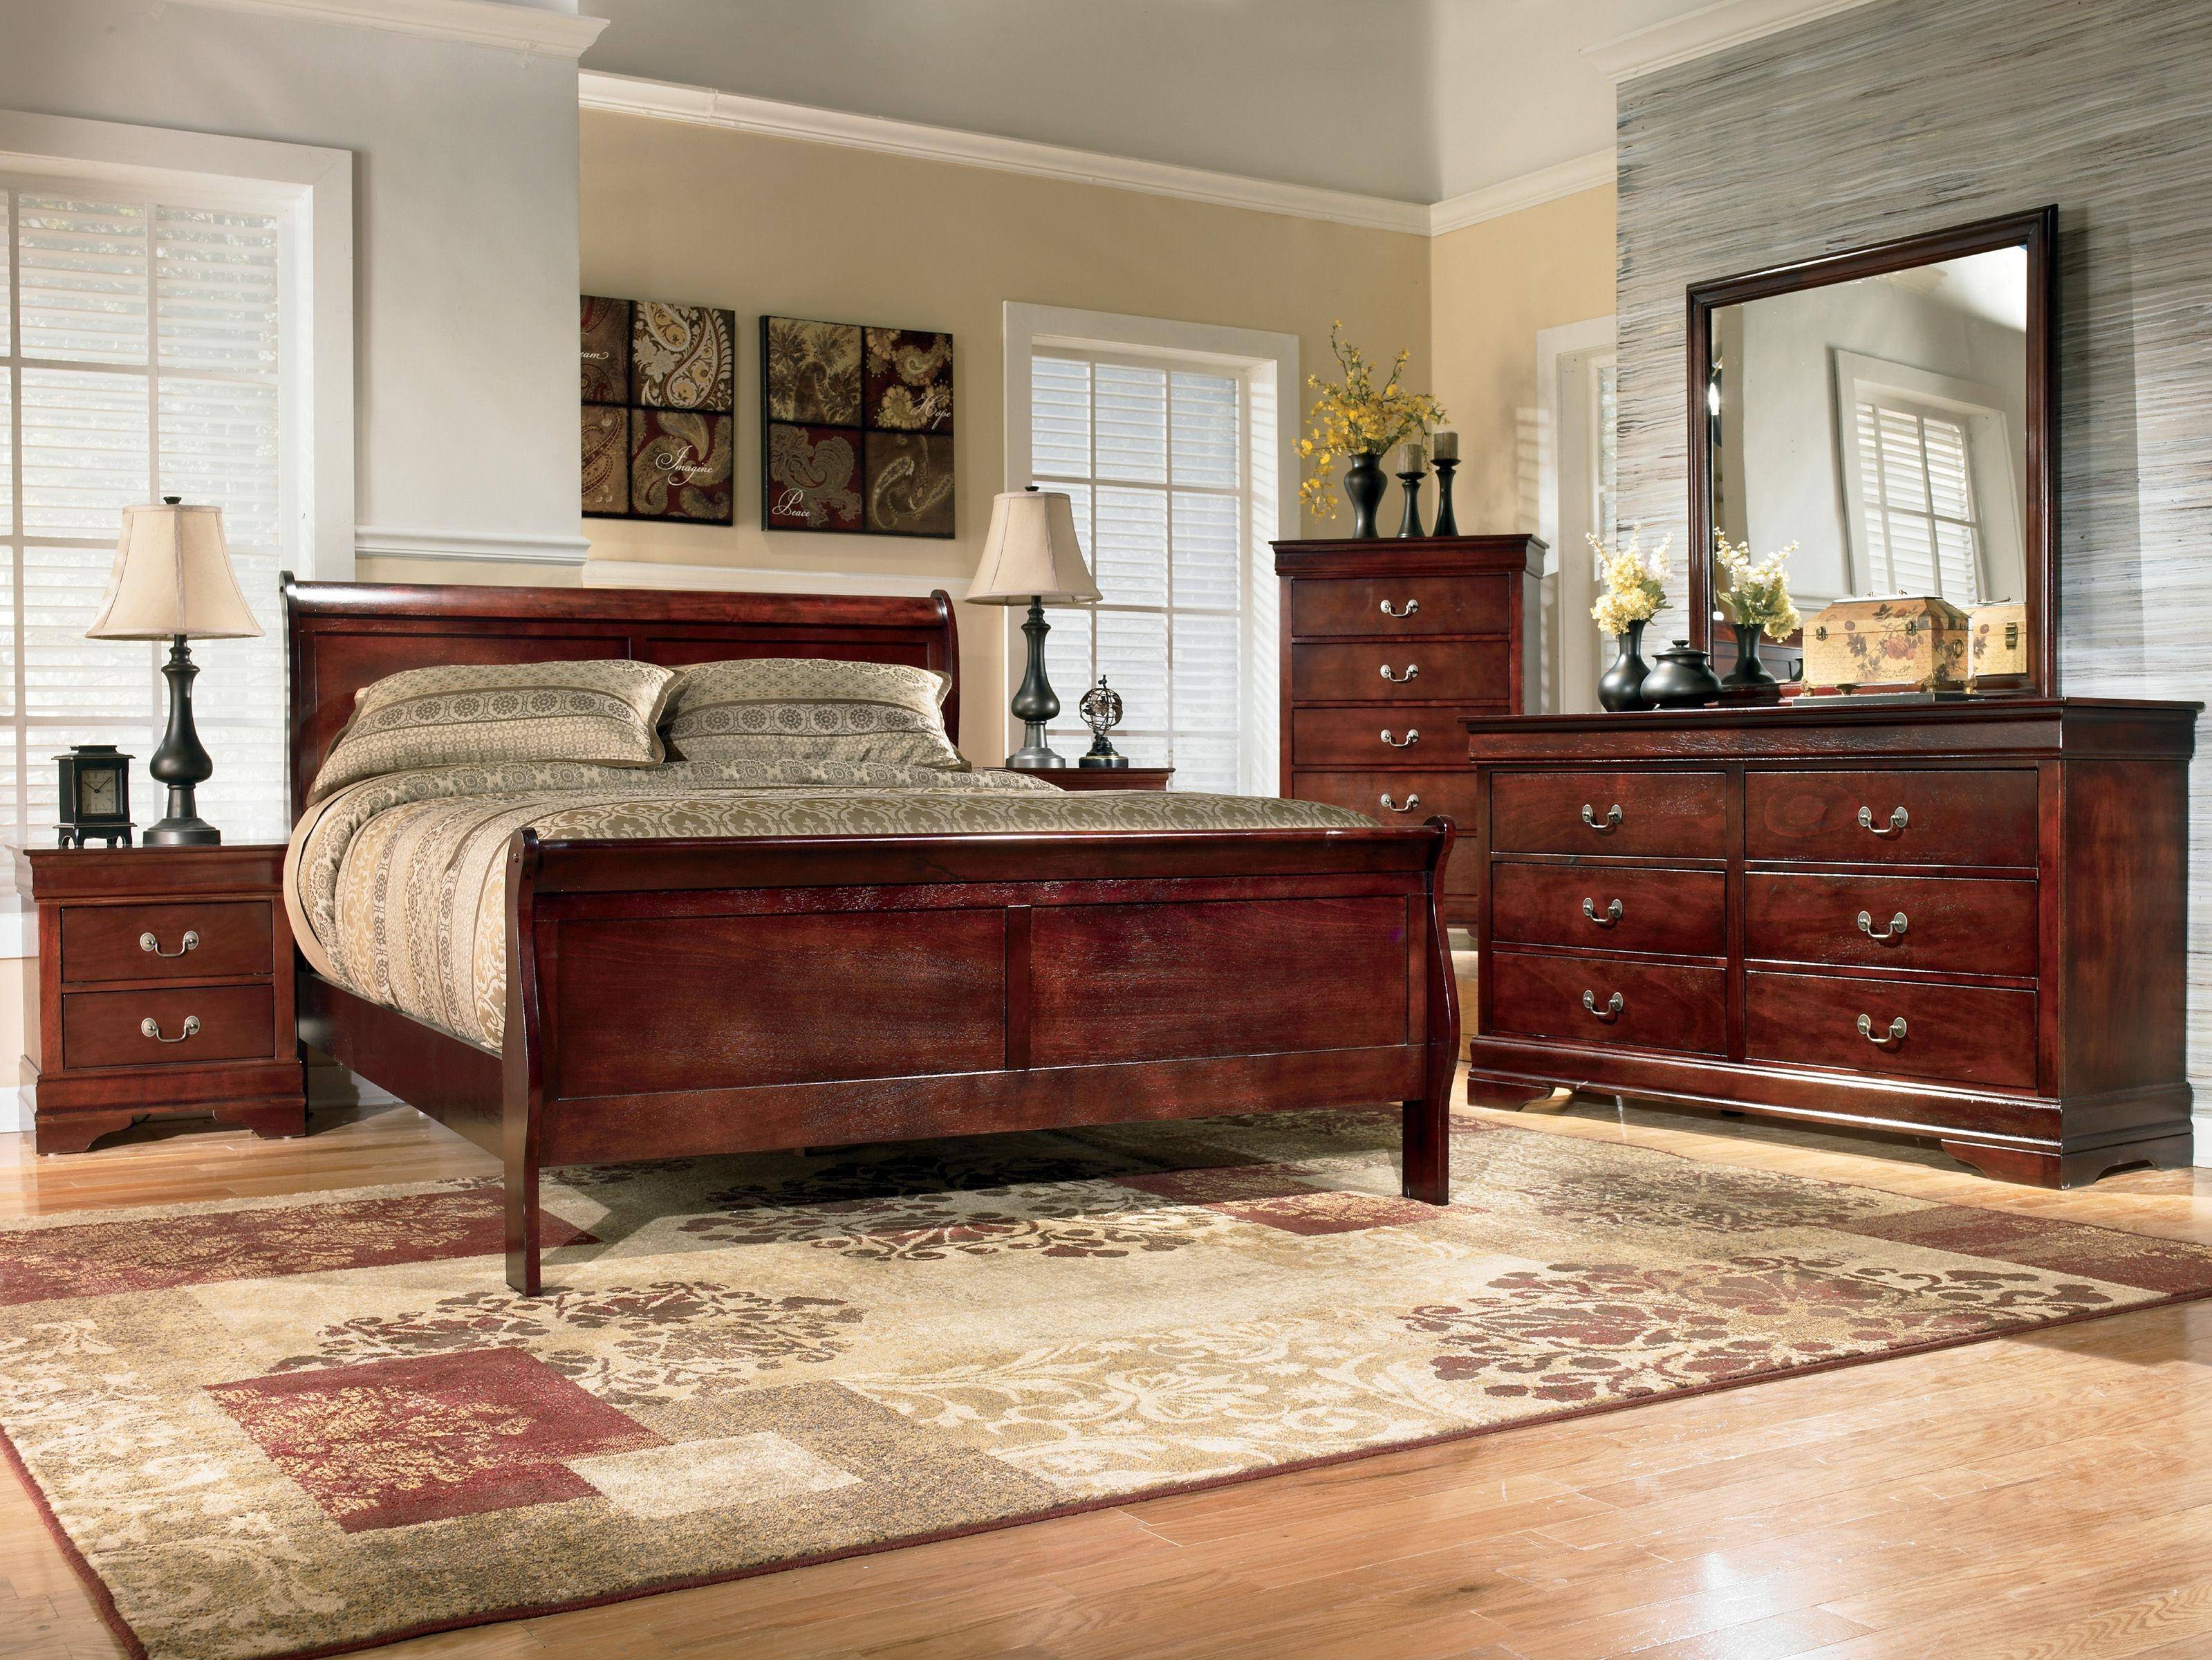 ashley homestore king bedroom furniture set